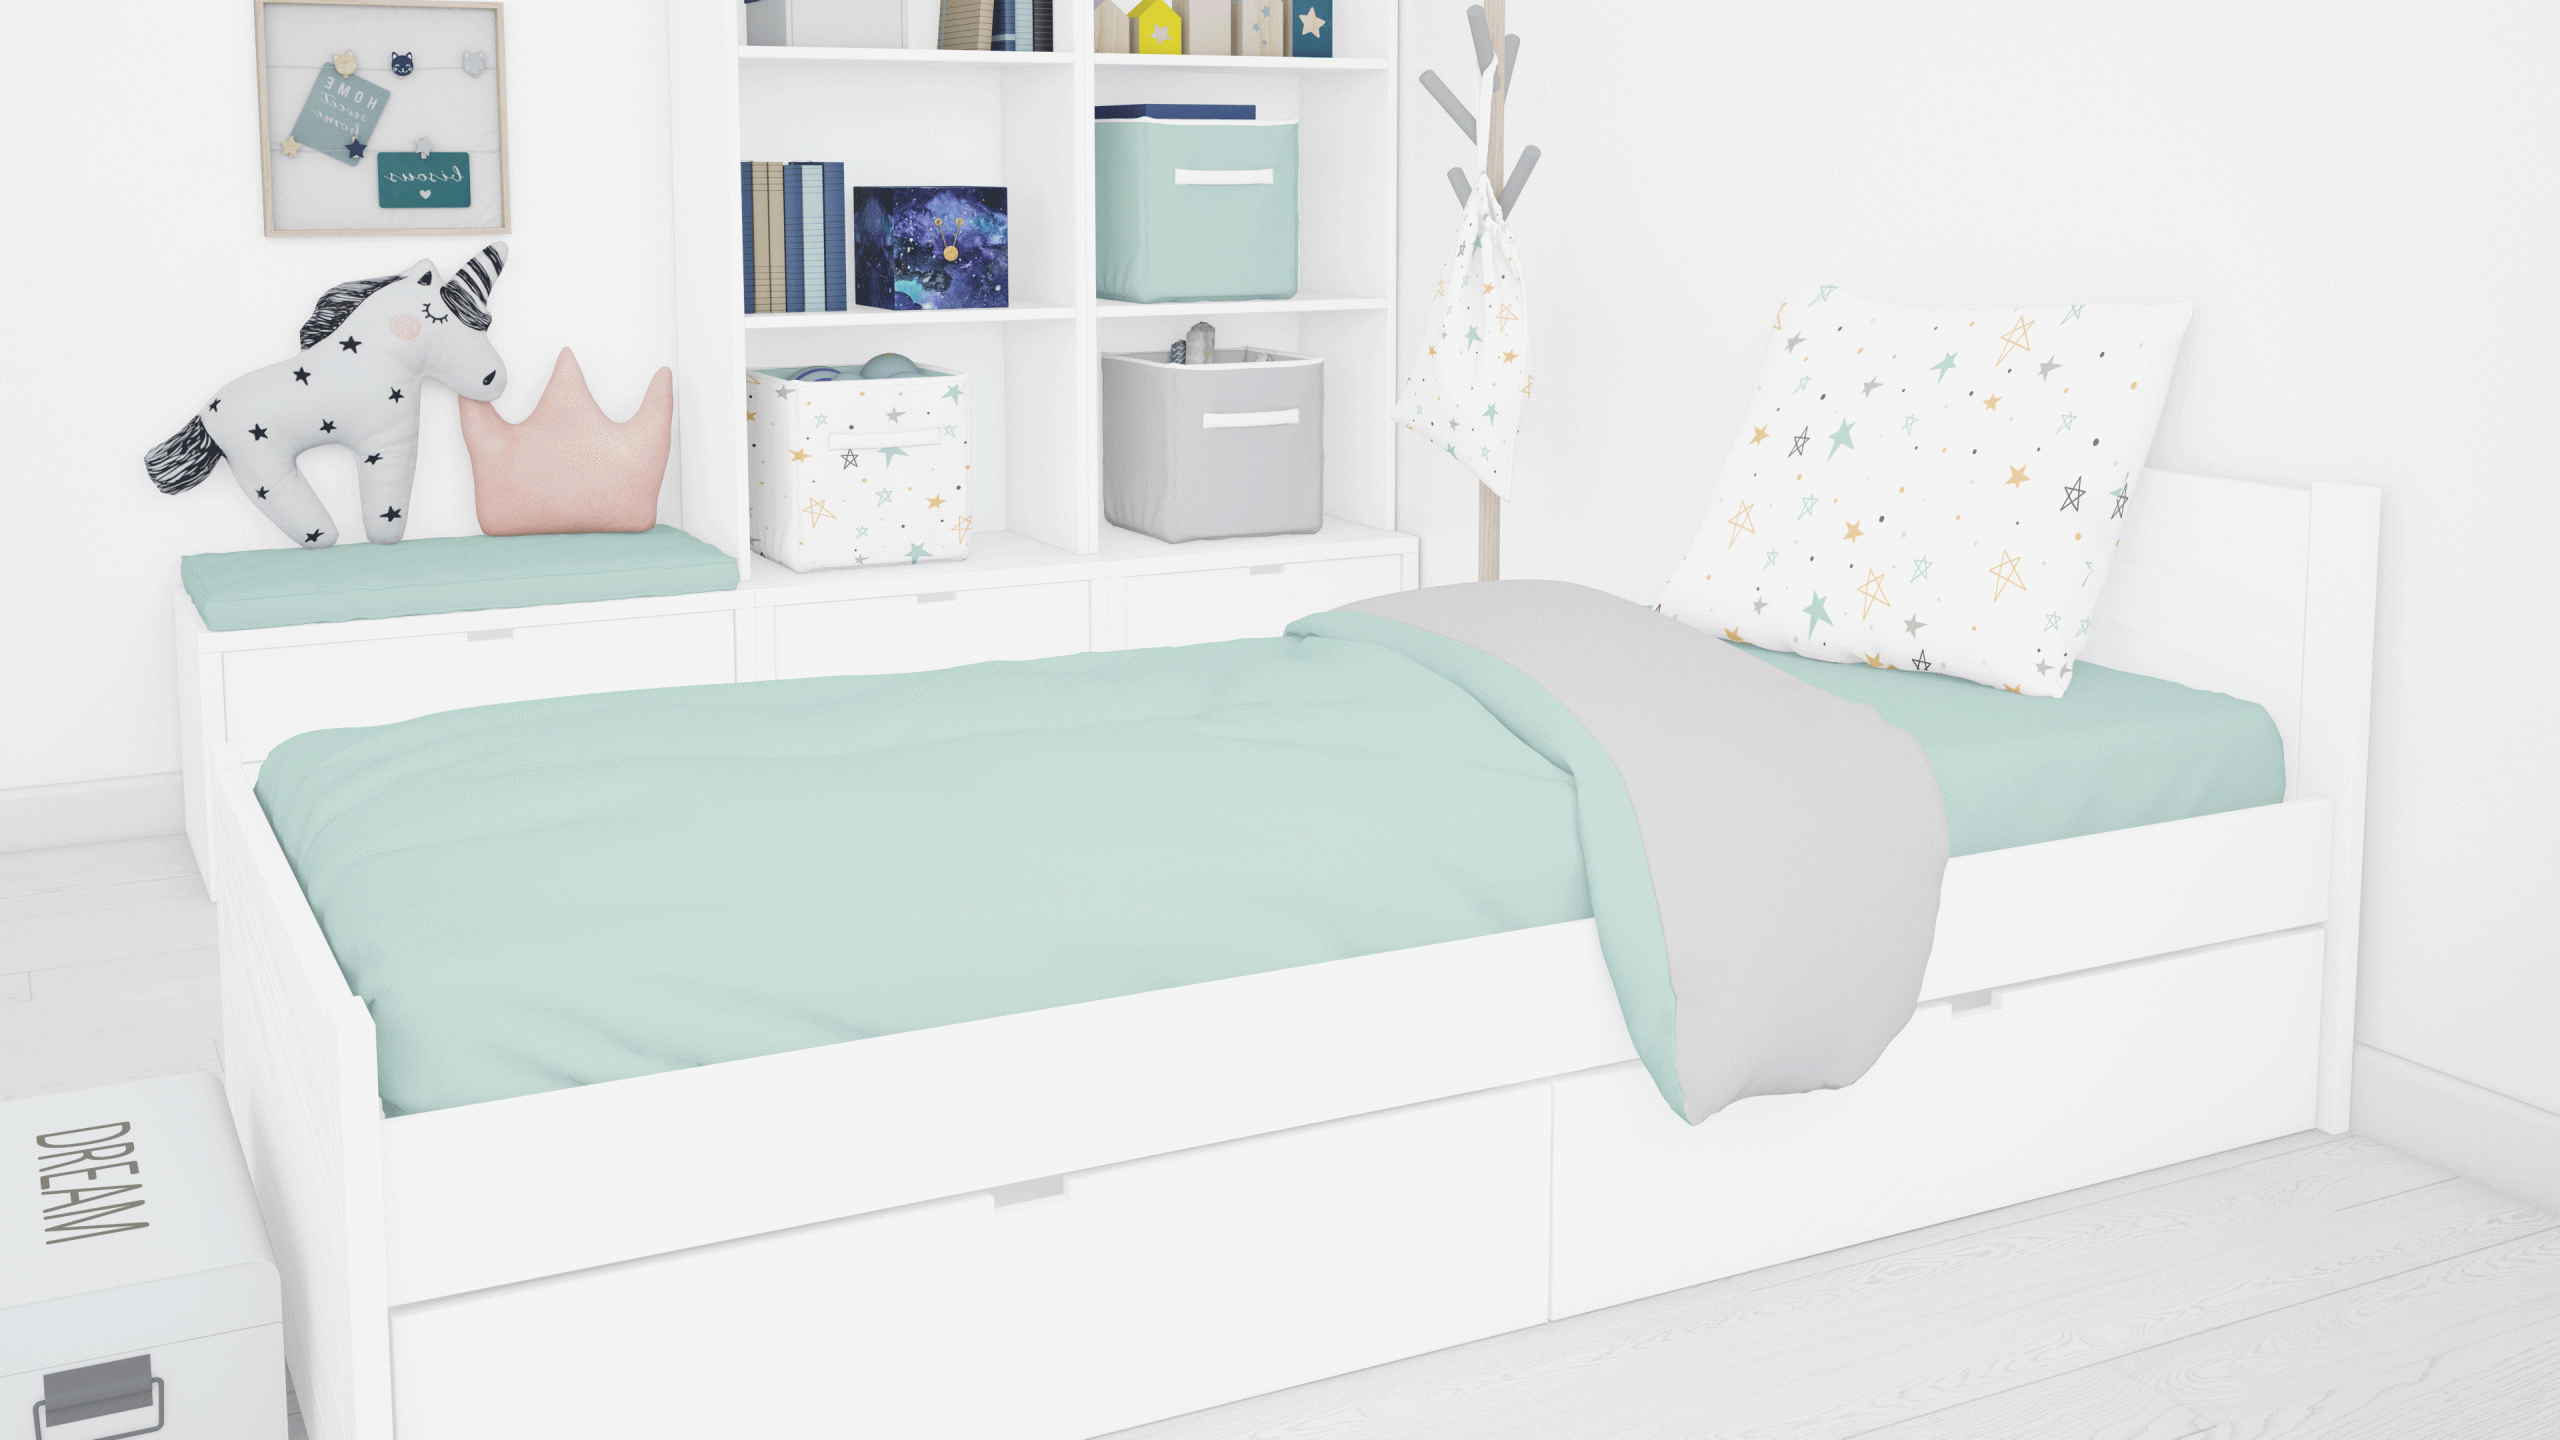 cama bajo otra cama - Buscar con Google  Sleepover beds, Single bed frame,  Room